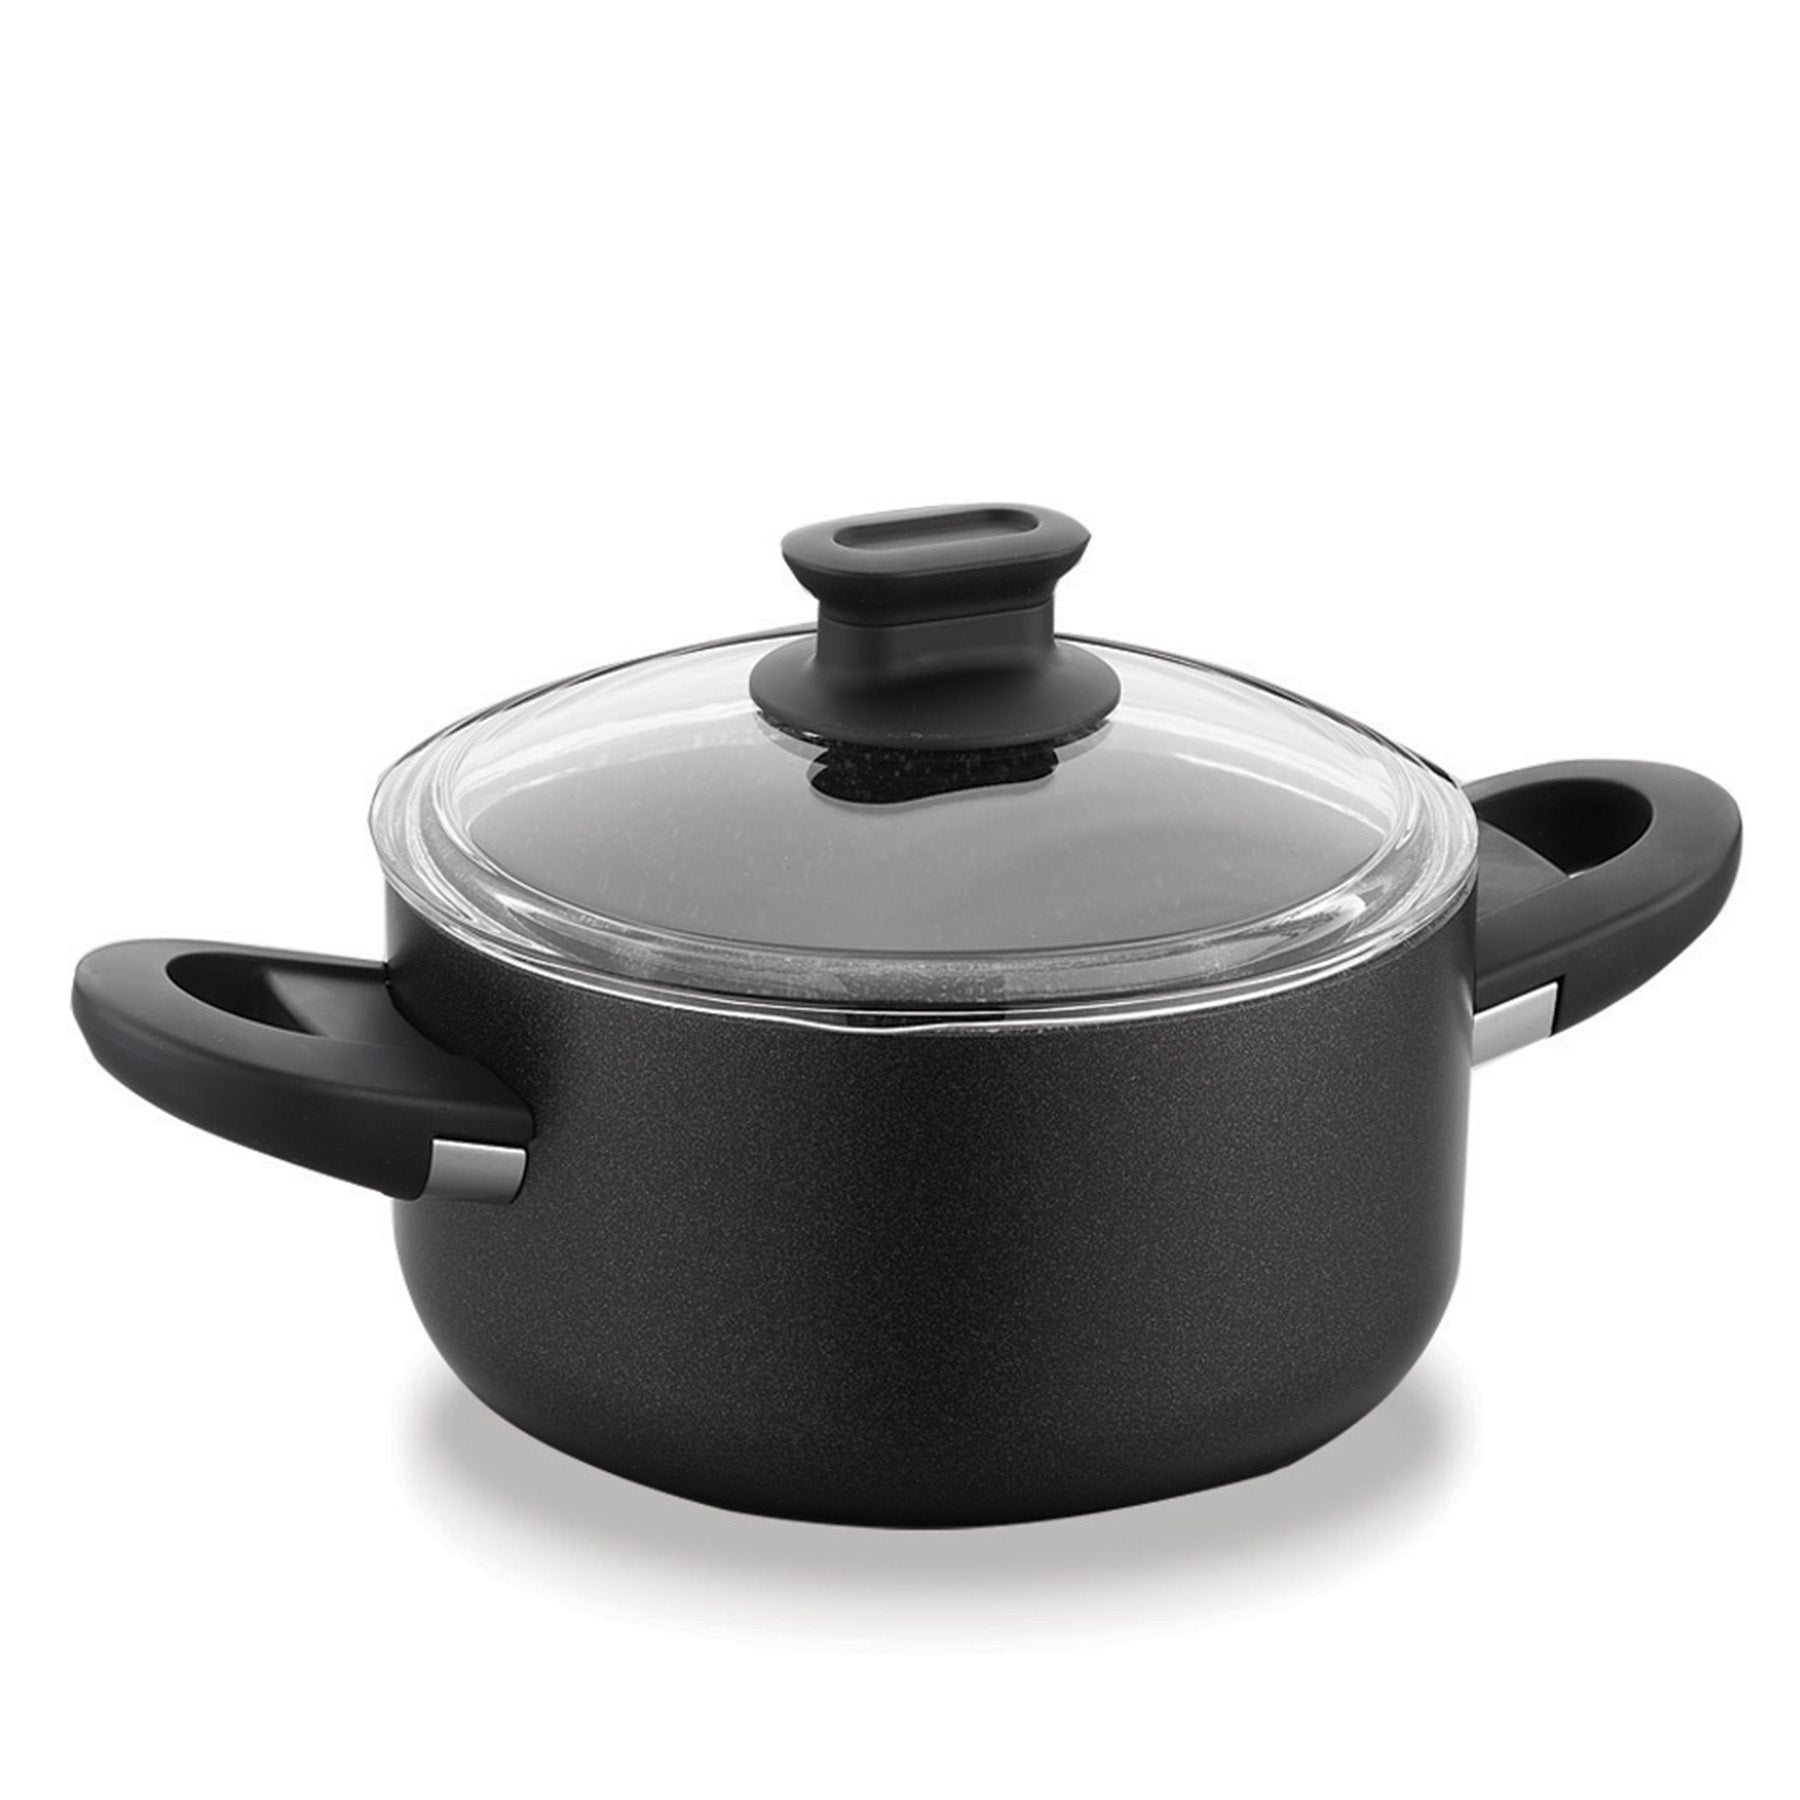 Cooking pot, Black